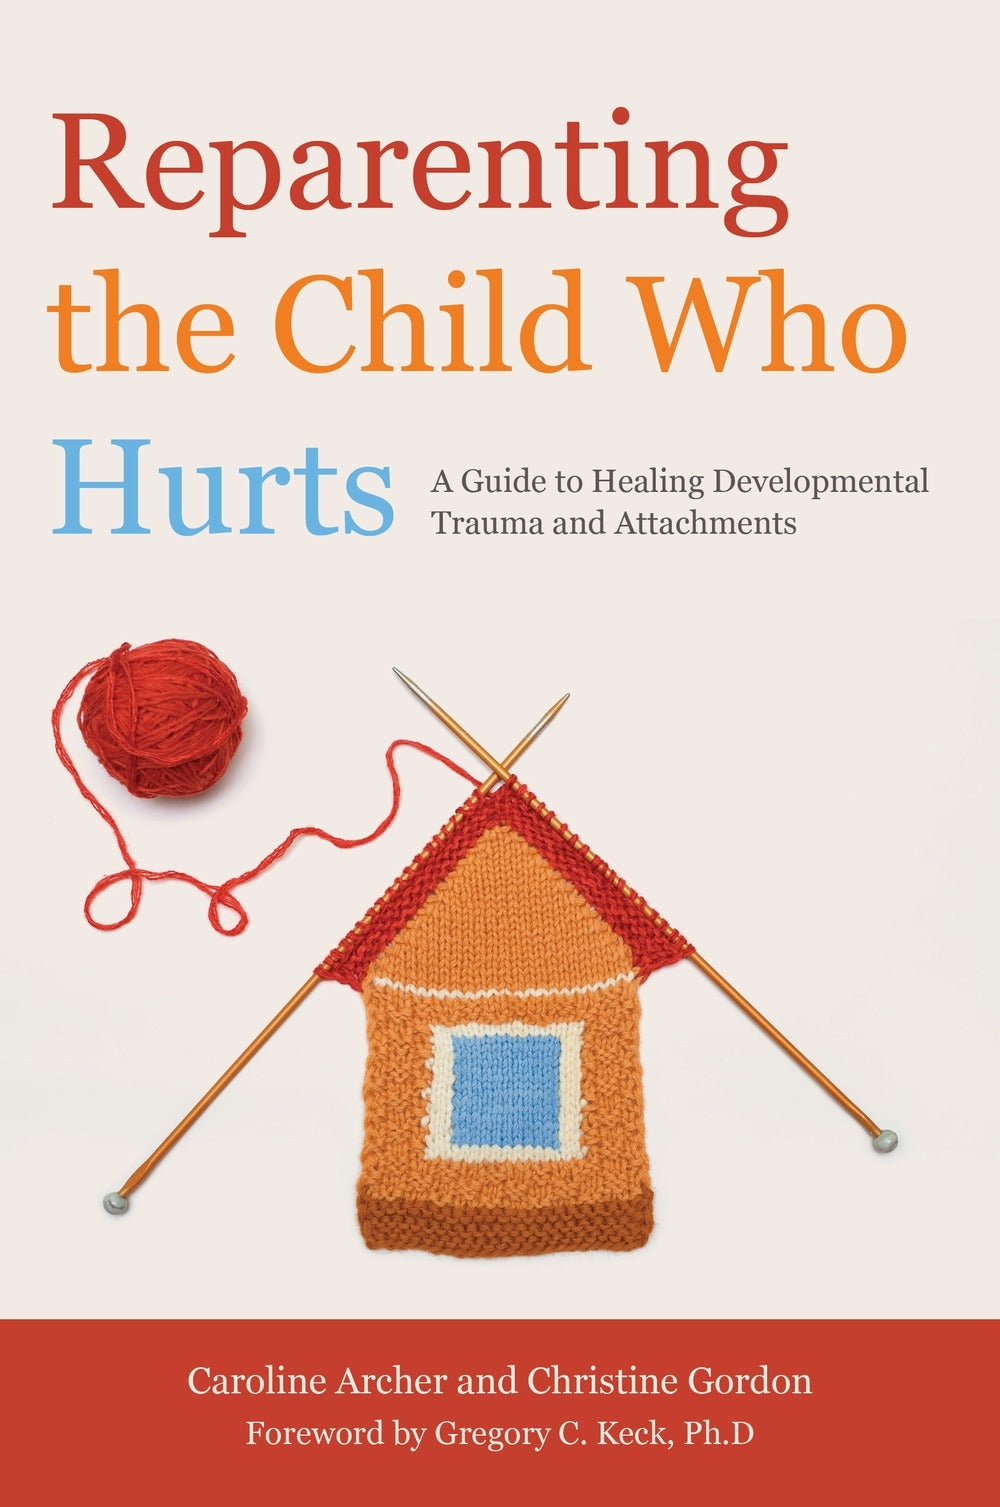 Reparenting the Child Who Hurts by Christine Gordon, Caroline Archer